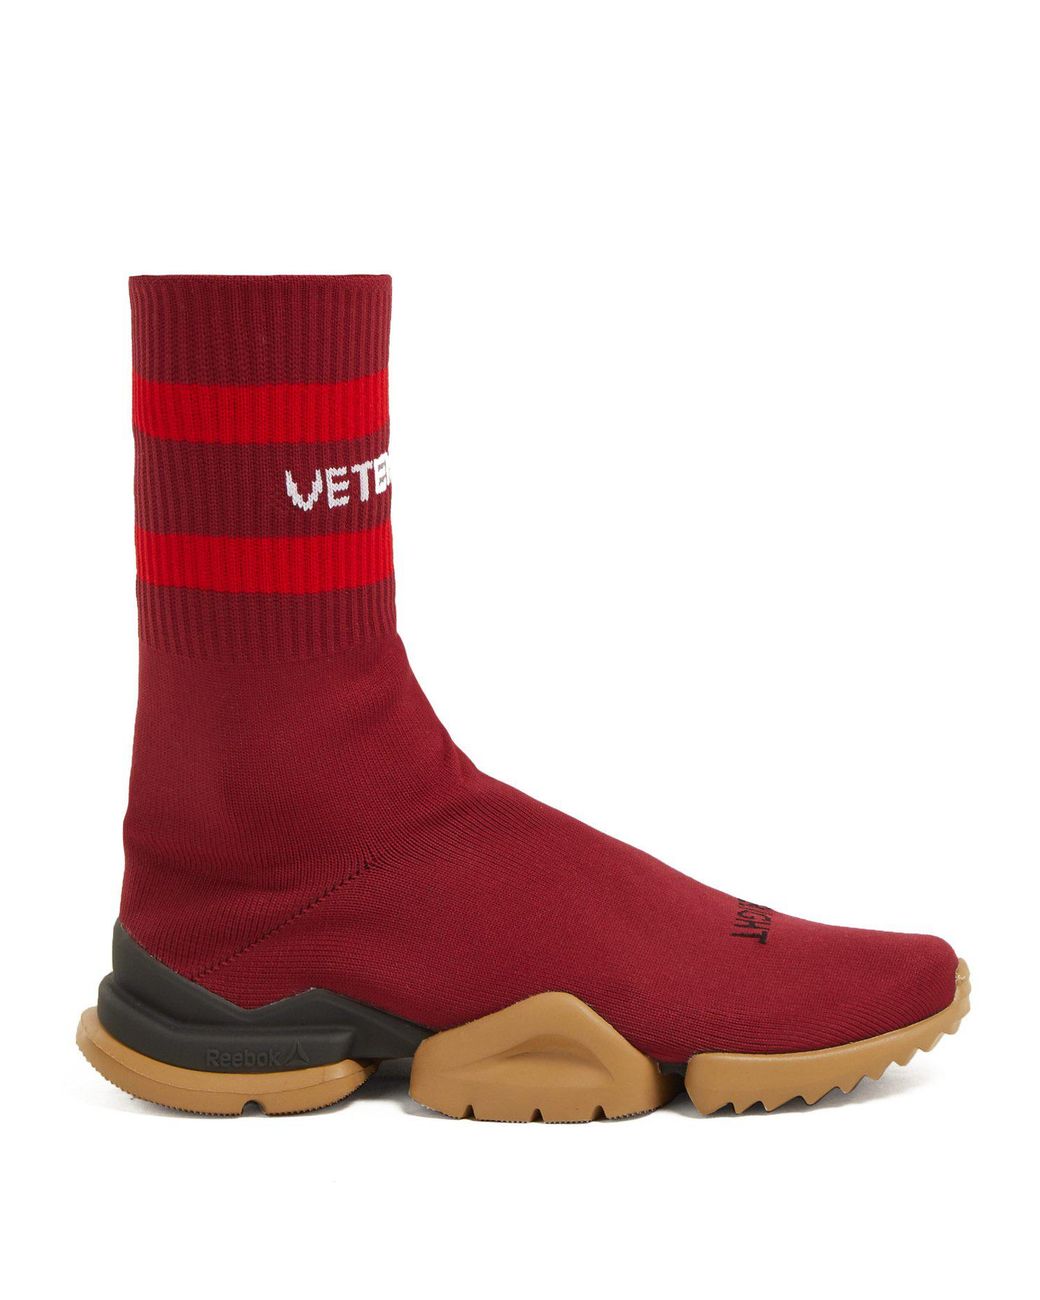 Vetements X Reebok Classic Sock Sneakers in Red | Lyst Canada